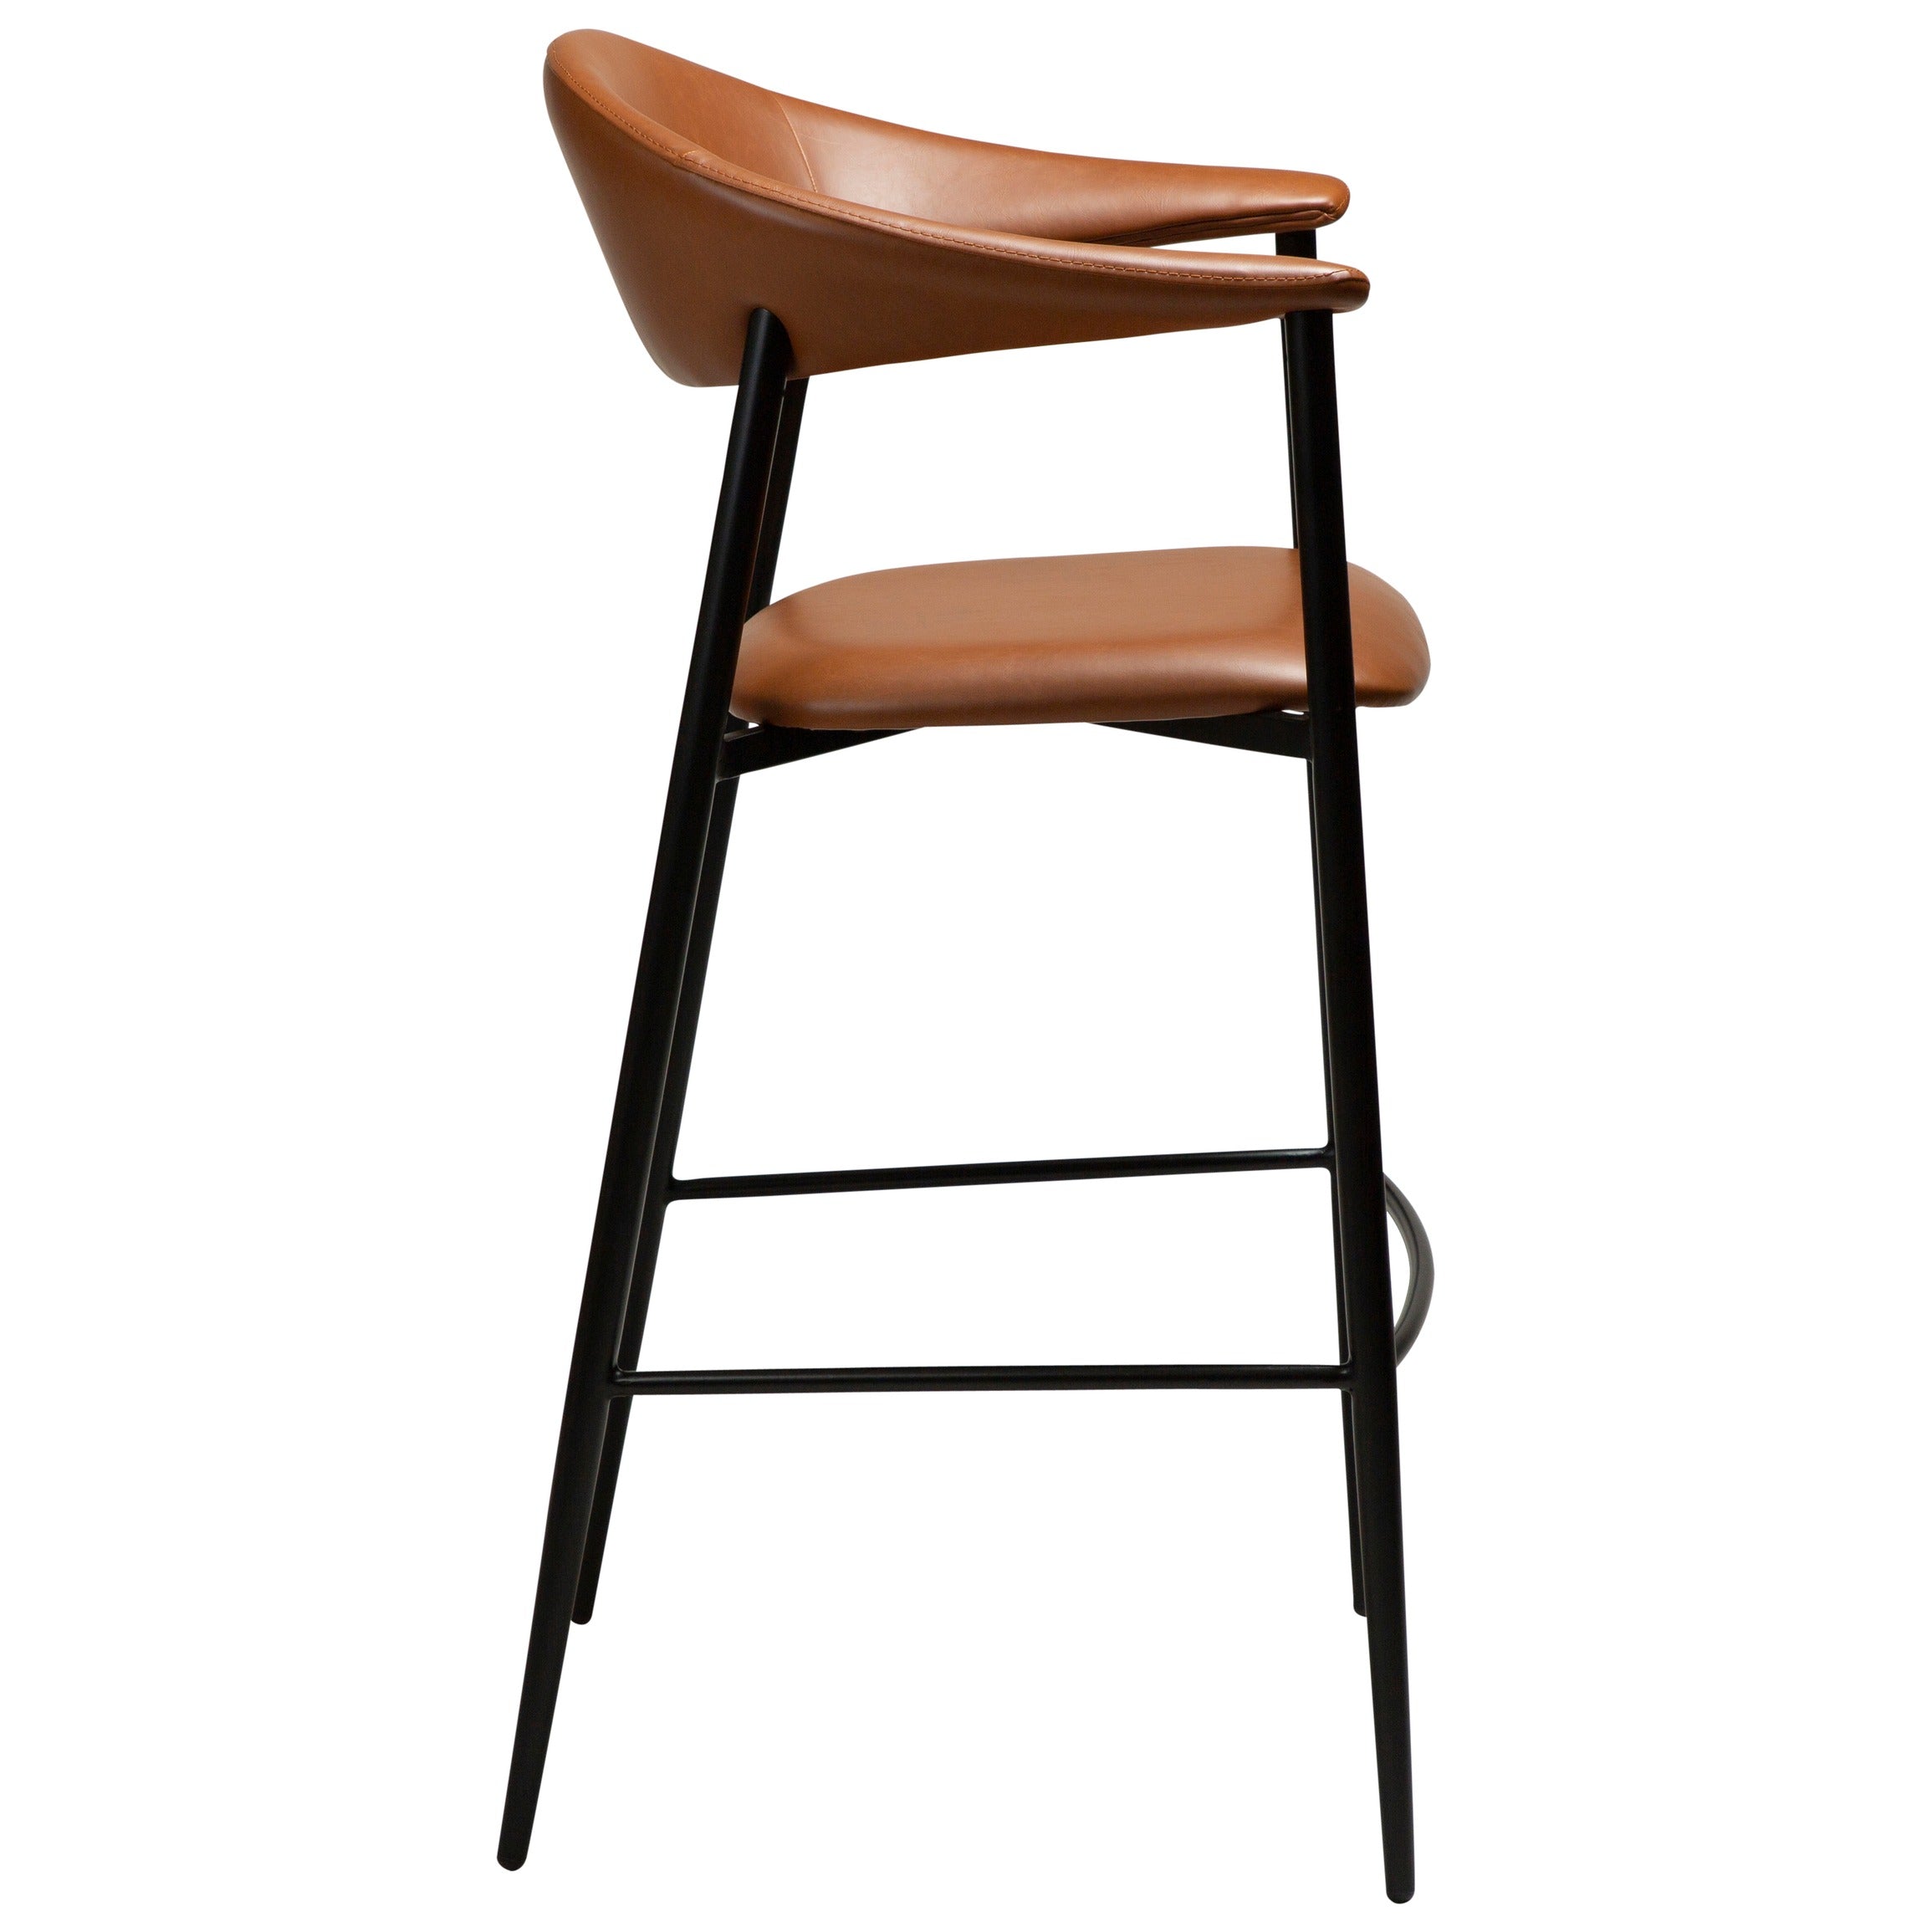 ROVER baro kėdė, ruda spalva